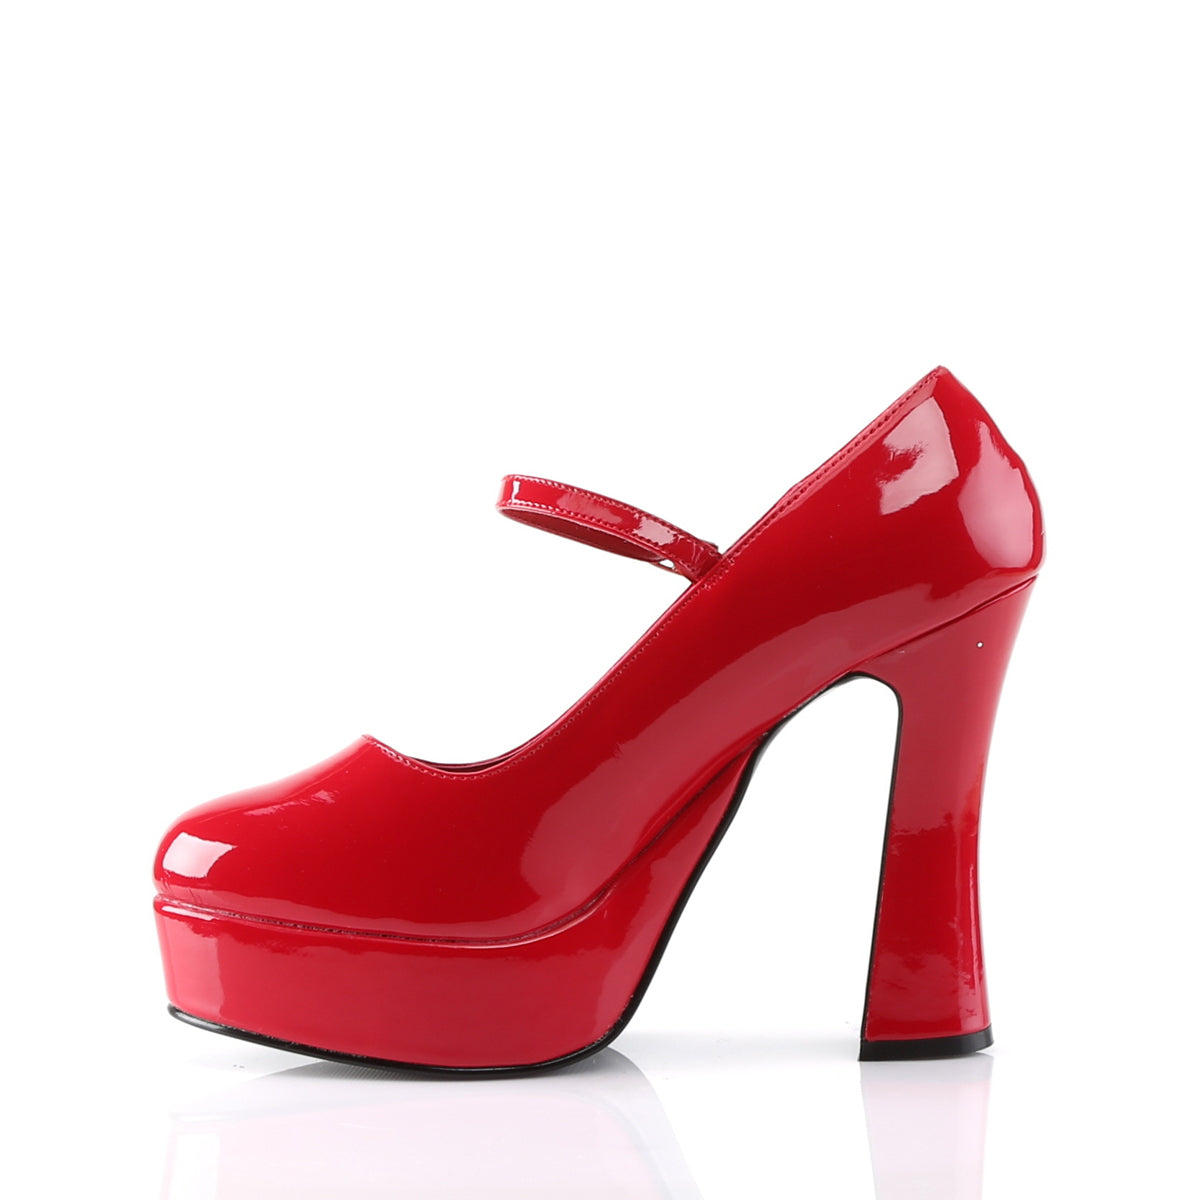 DOLLY-50 Demonia Red Patent Women's Heels & Platform Shoes [Demonia Cult Alternative Footwear]